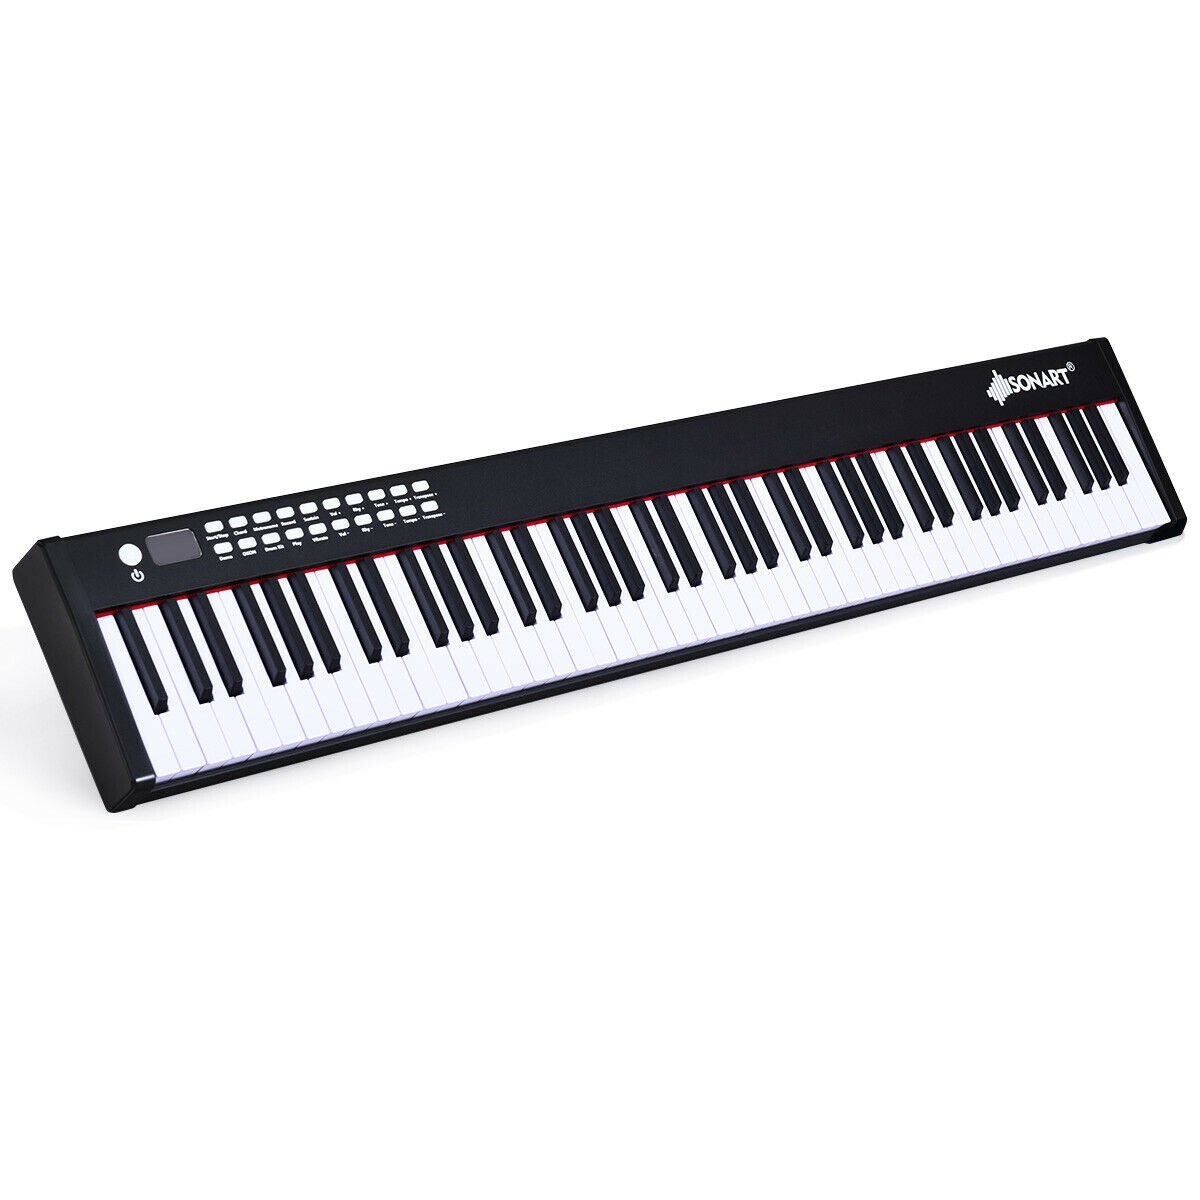 88-Key Portable Full-Size Semi-weighted Digital Piano Keyboard, Black at Gallery Canada